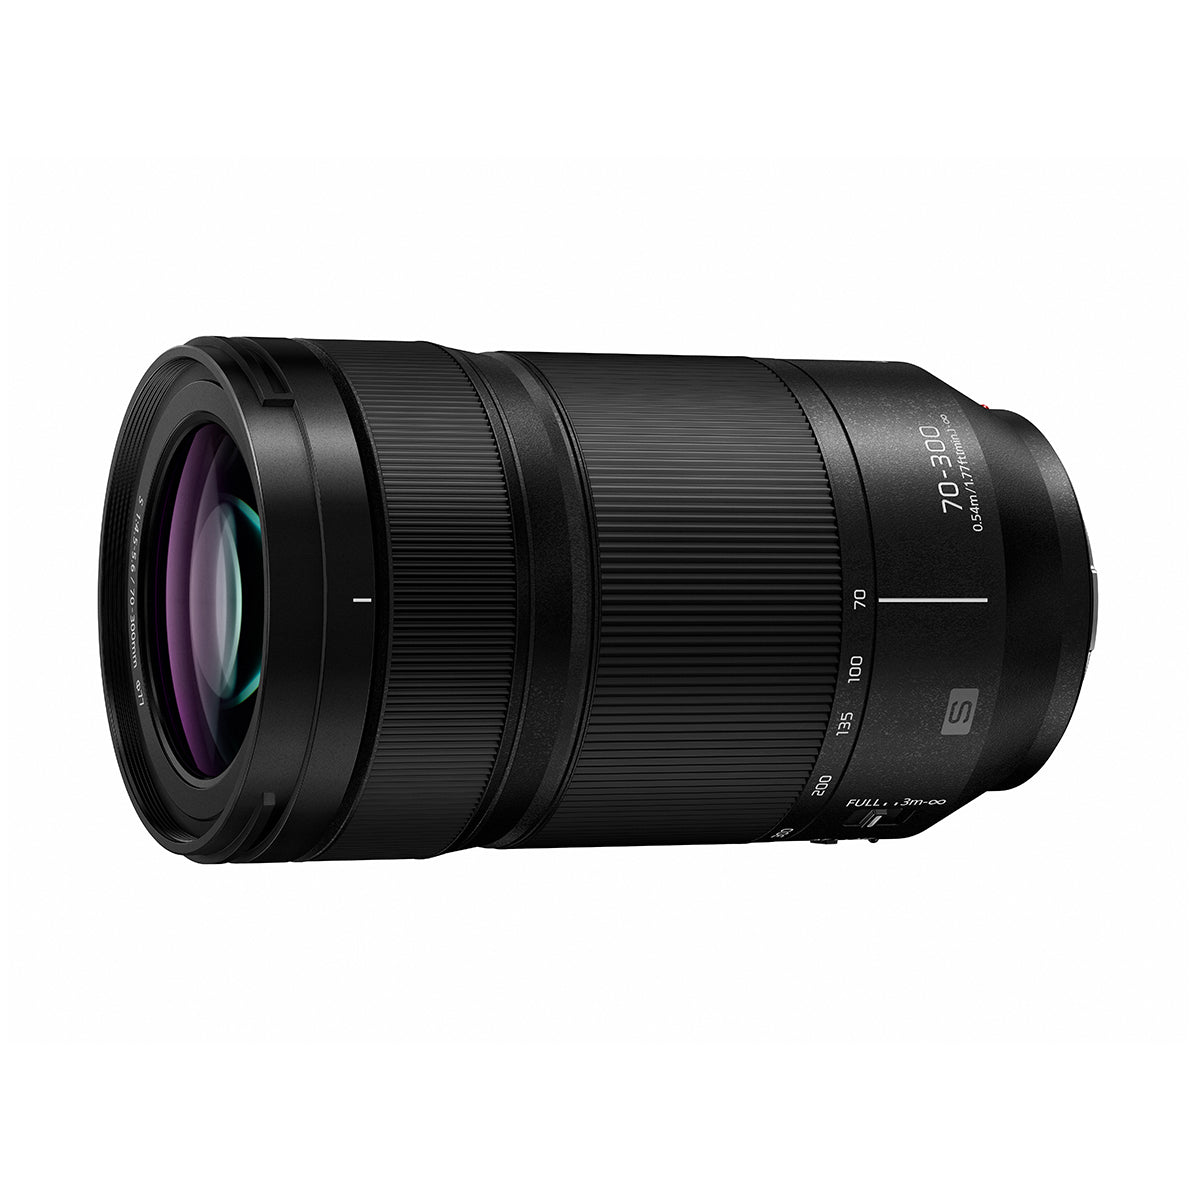 Panasonic LUMIX S 70-300mm f/4.5-5.6 Macro O.I.S. Lens